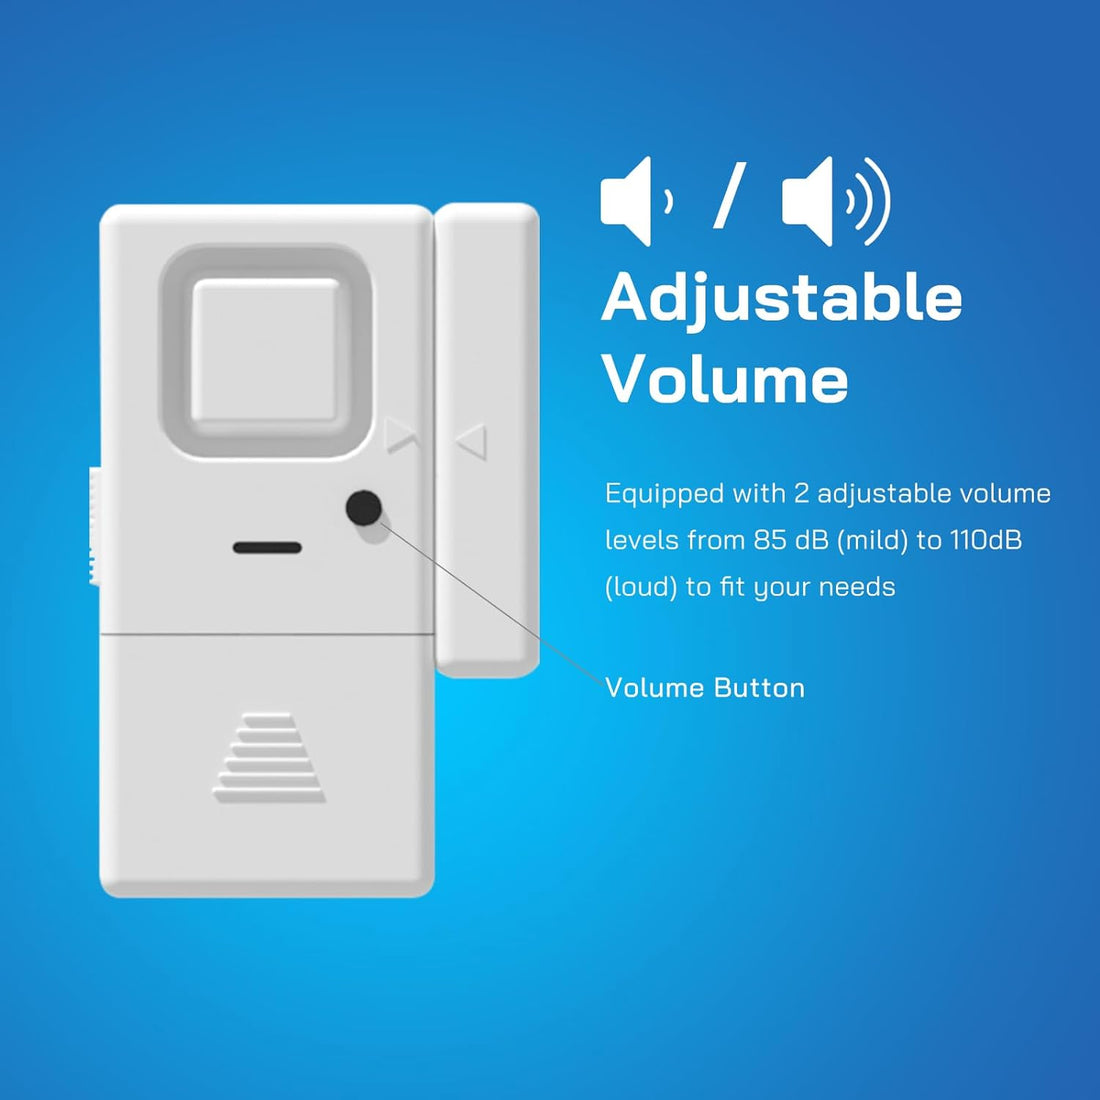 Door Window Alarm 2 Pack Home Security Sensor Burglar Anti-Theft 110DB Alarm with Batteries Included by Rosmila (2 Pack)